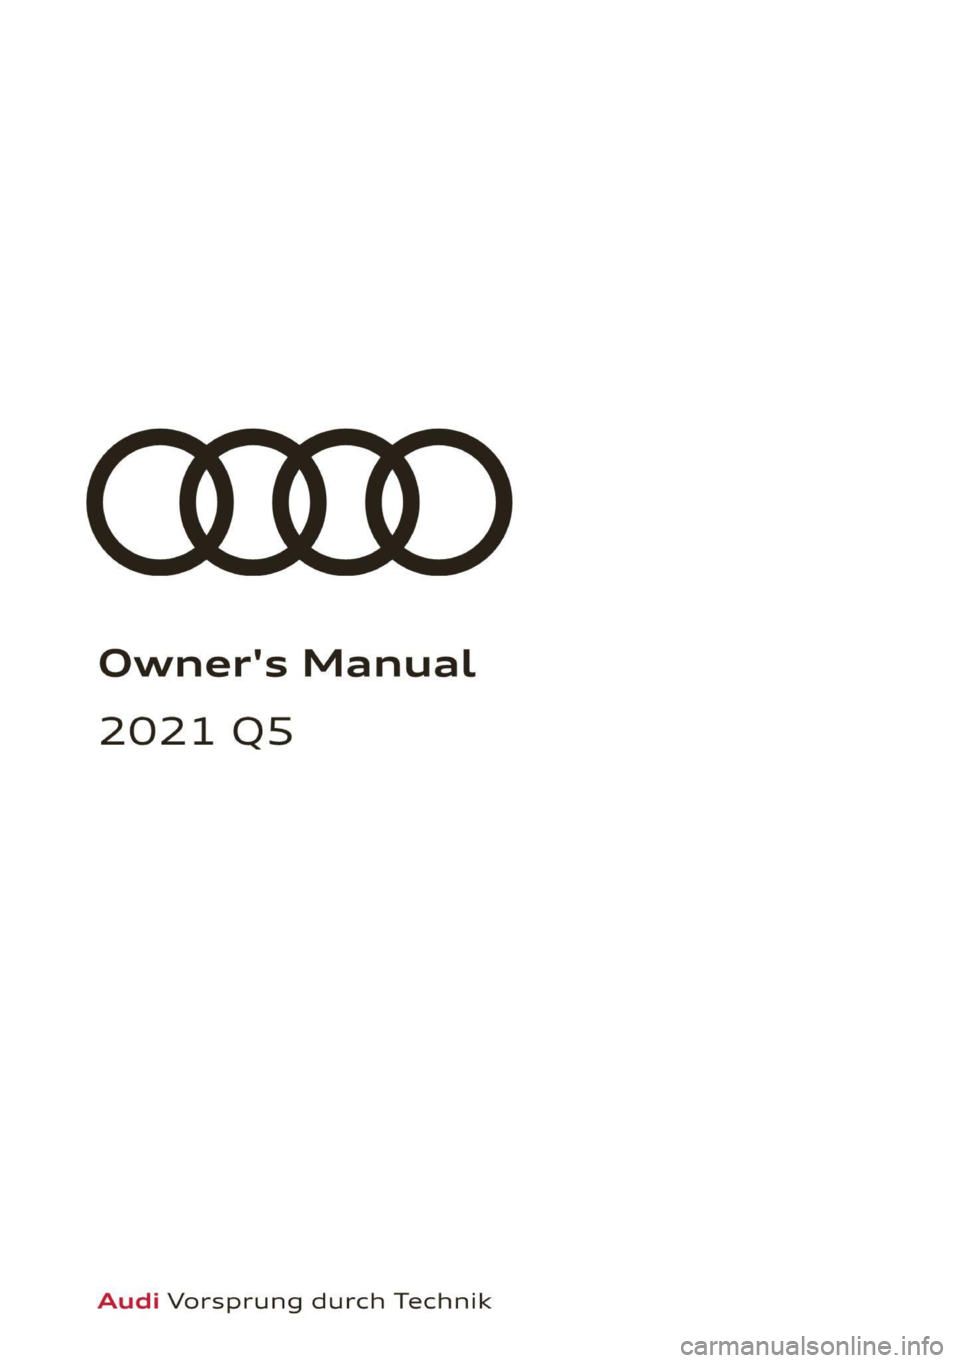 AUDI Q5 2021  Owner´s Manual Owner's Manual 
2021 Q5 
Audi Vorsprung durch Technik  